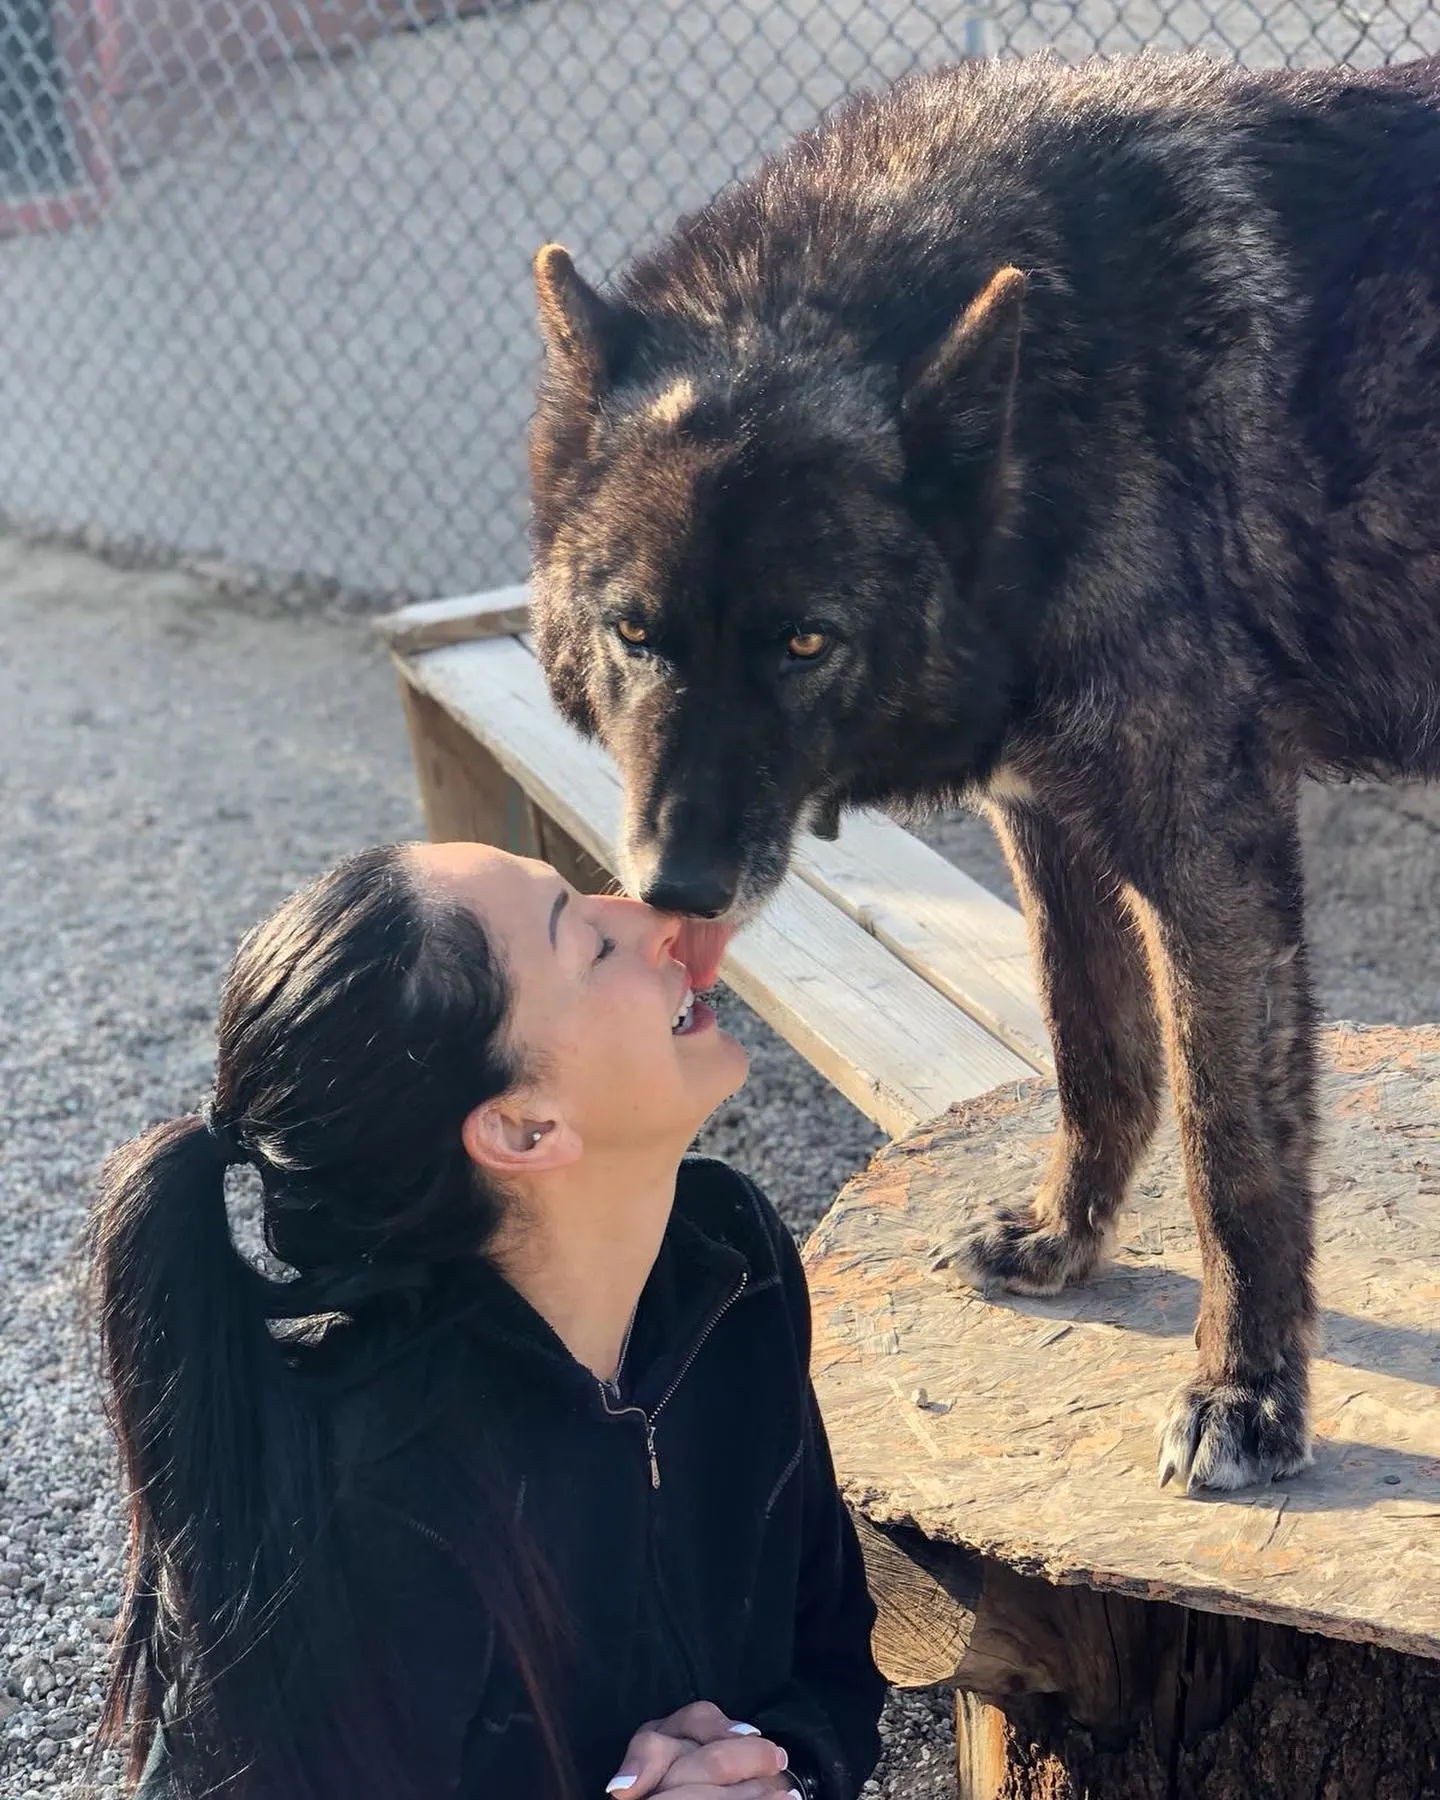 wolfdog licking woman's face